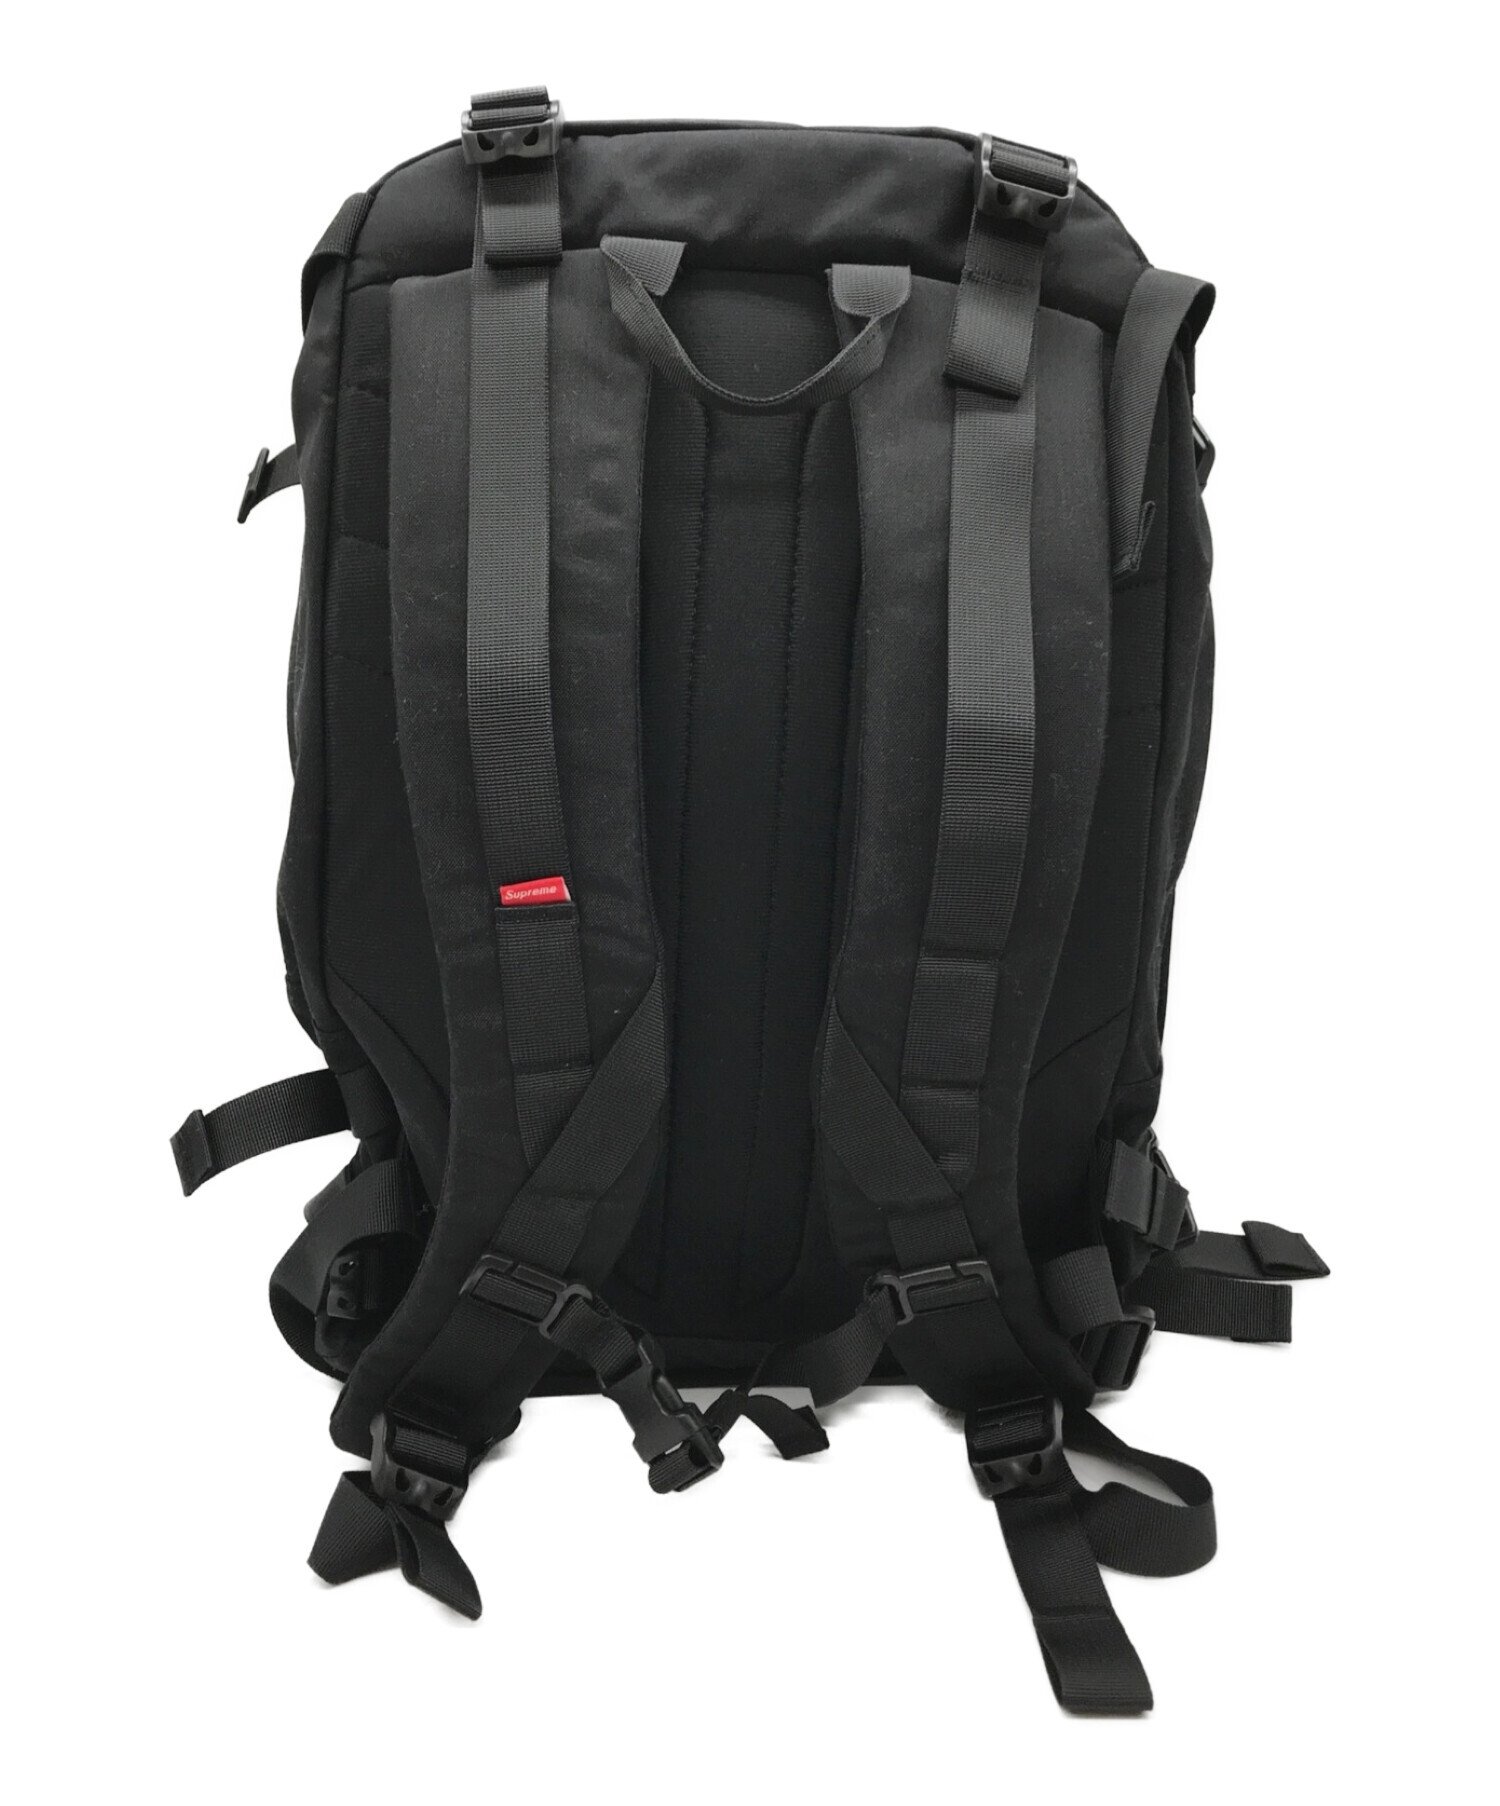 SS20/Supreme x T RTG Backpack